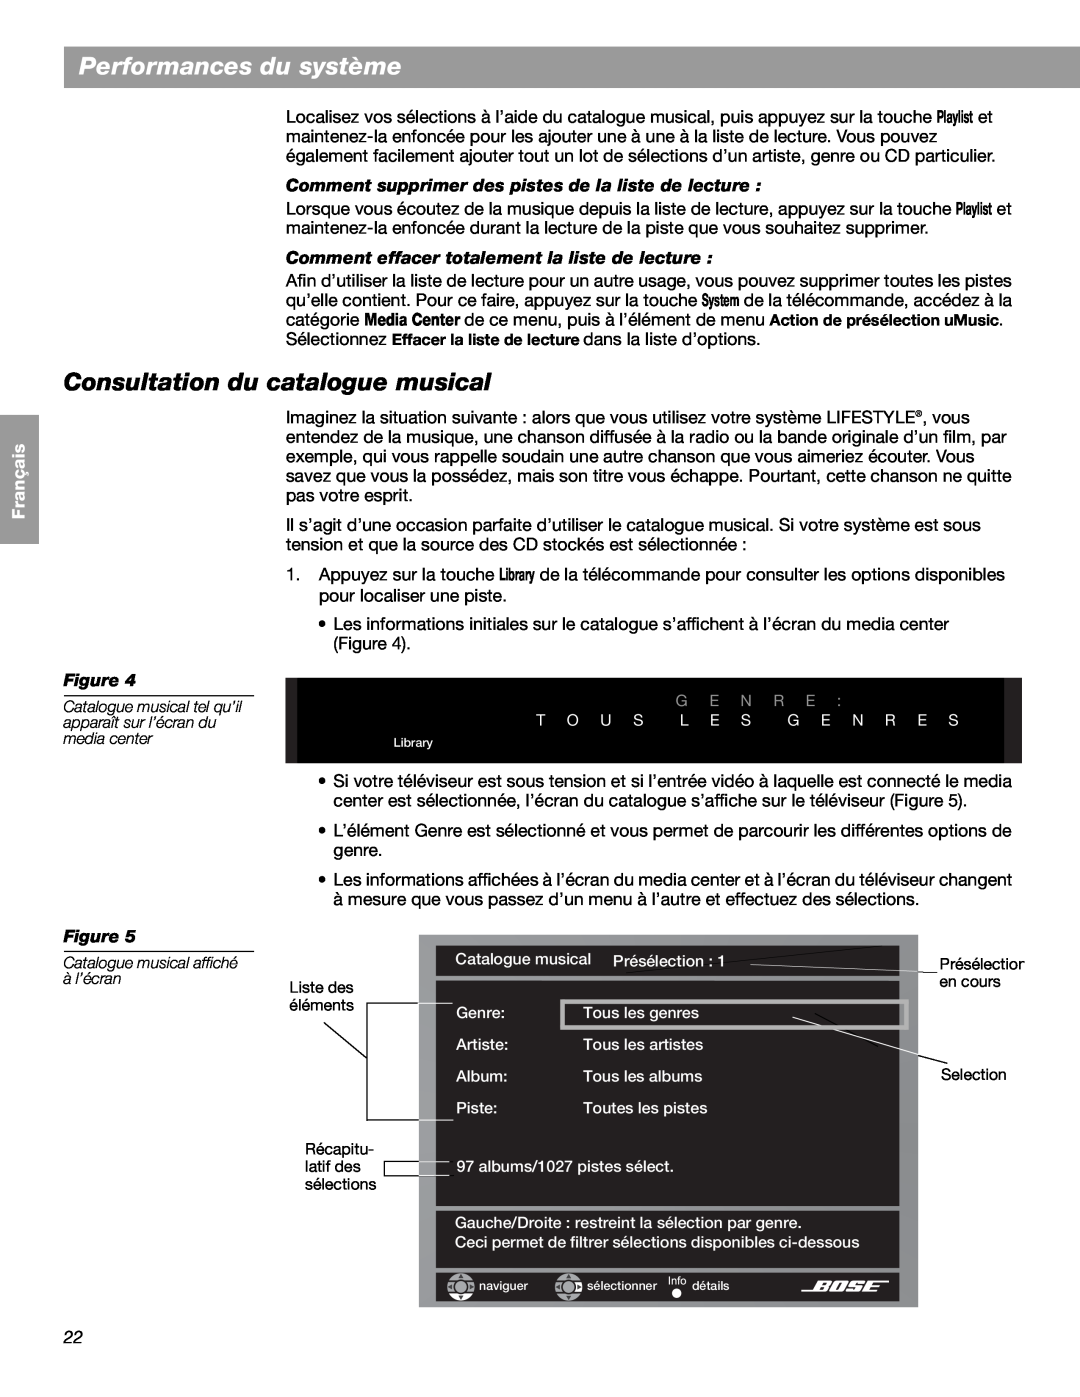 Bose LIFESTYLE 48 manual Consultation du catalogue musical, Performances du système, English Español, Français, Figure 